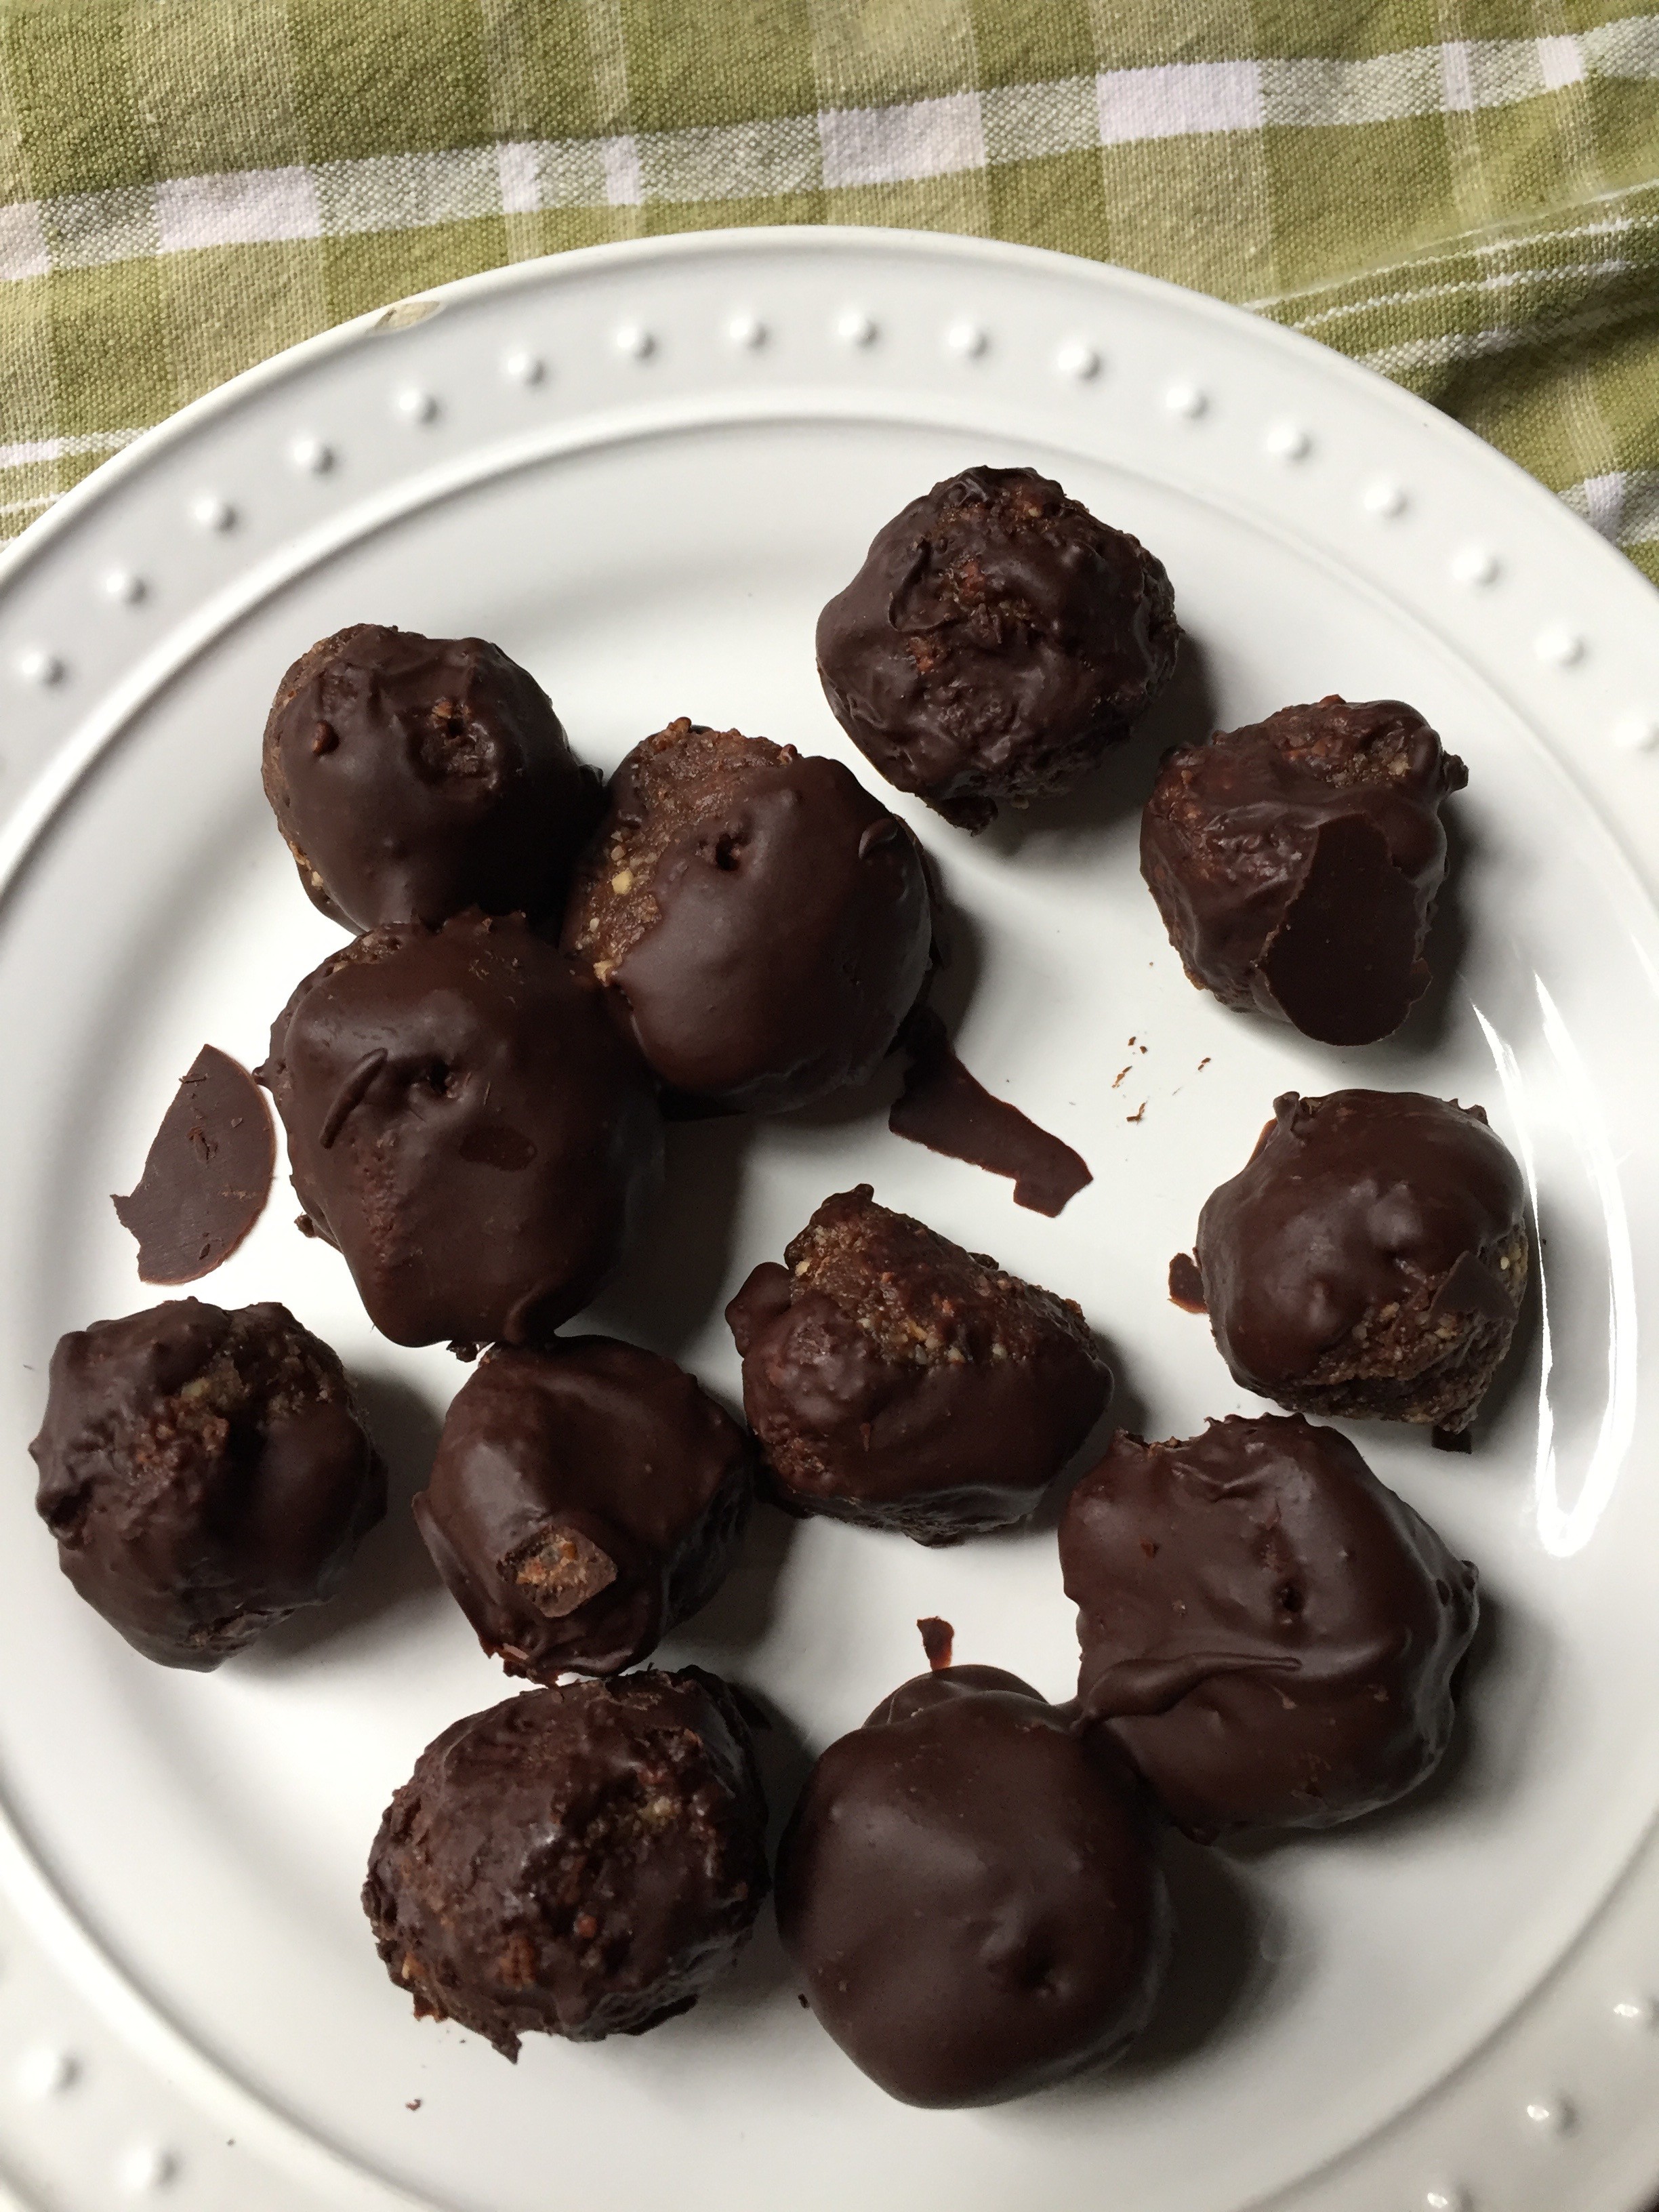 Cardamom-kissed chocolate truffles